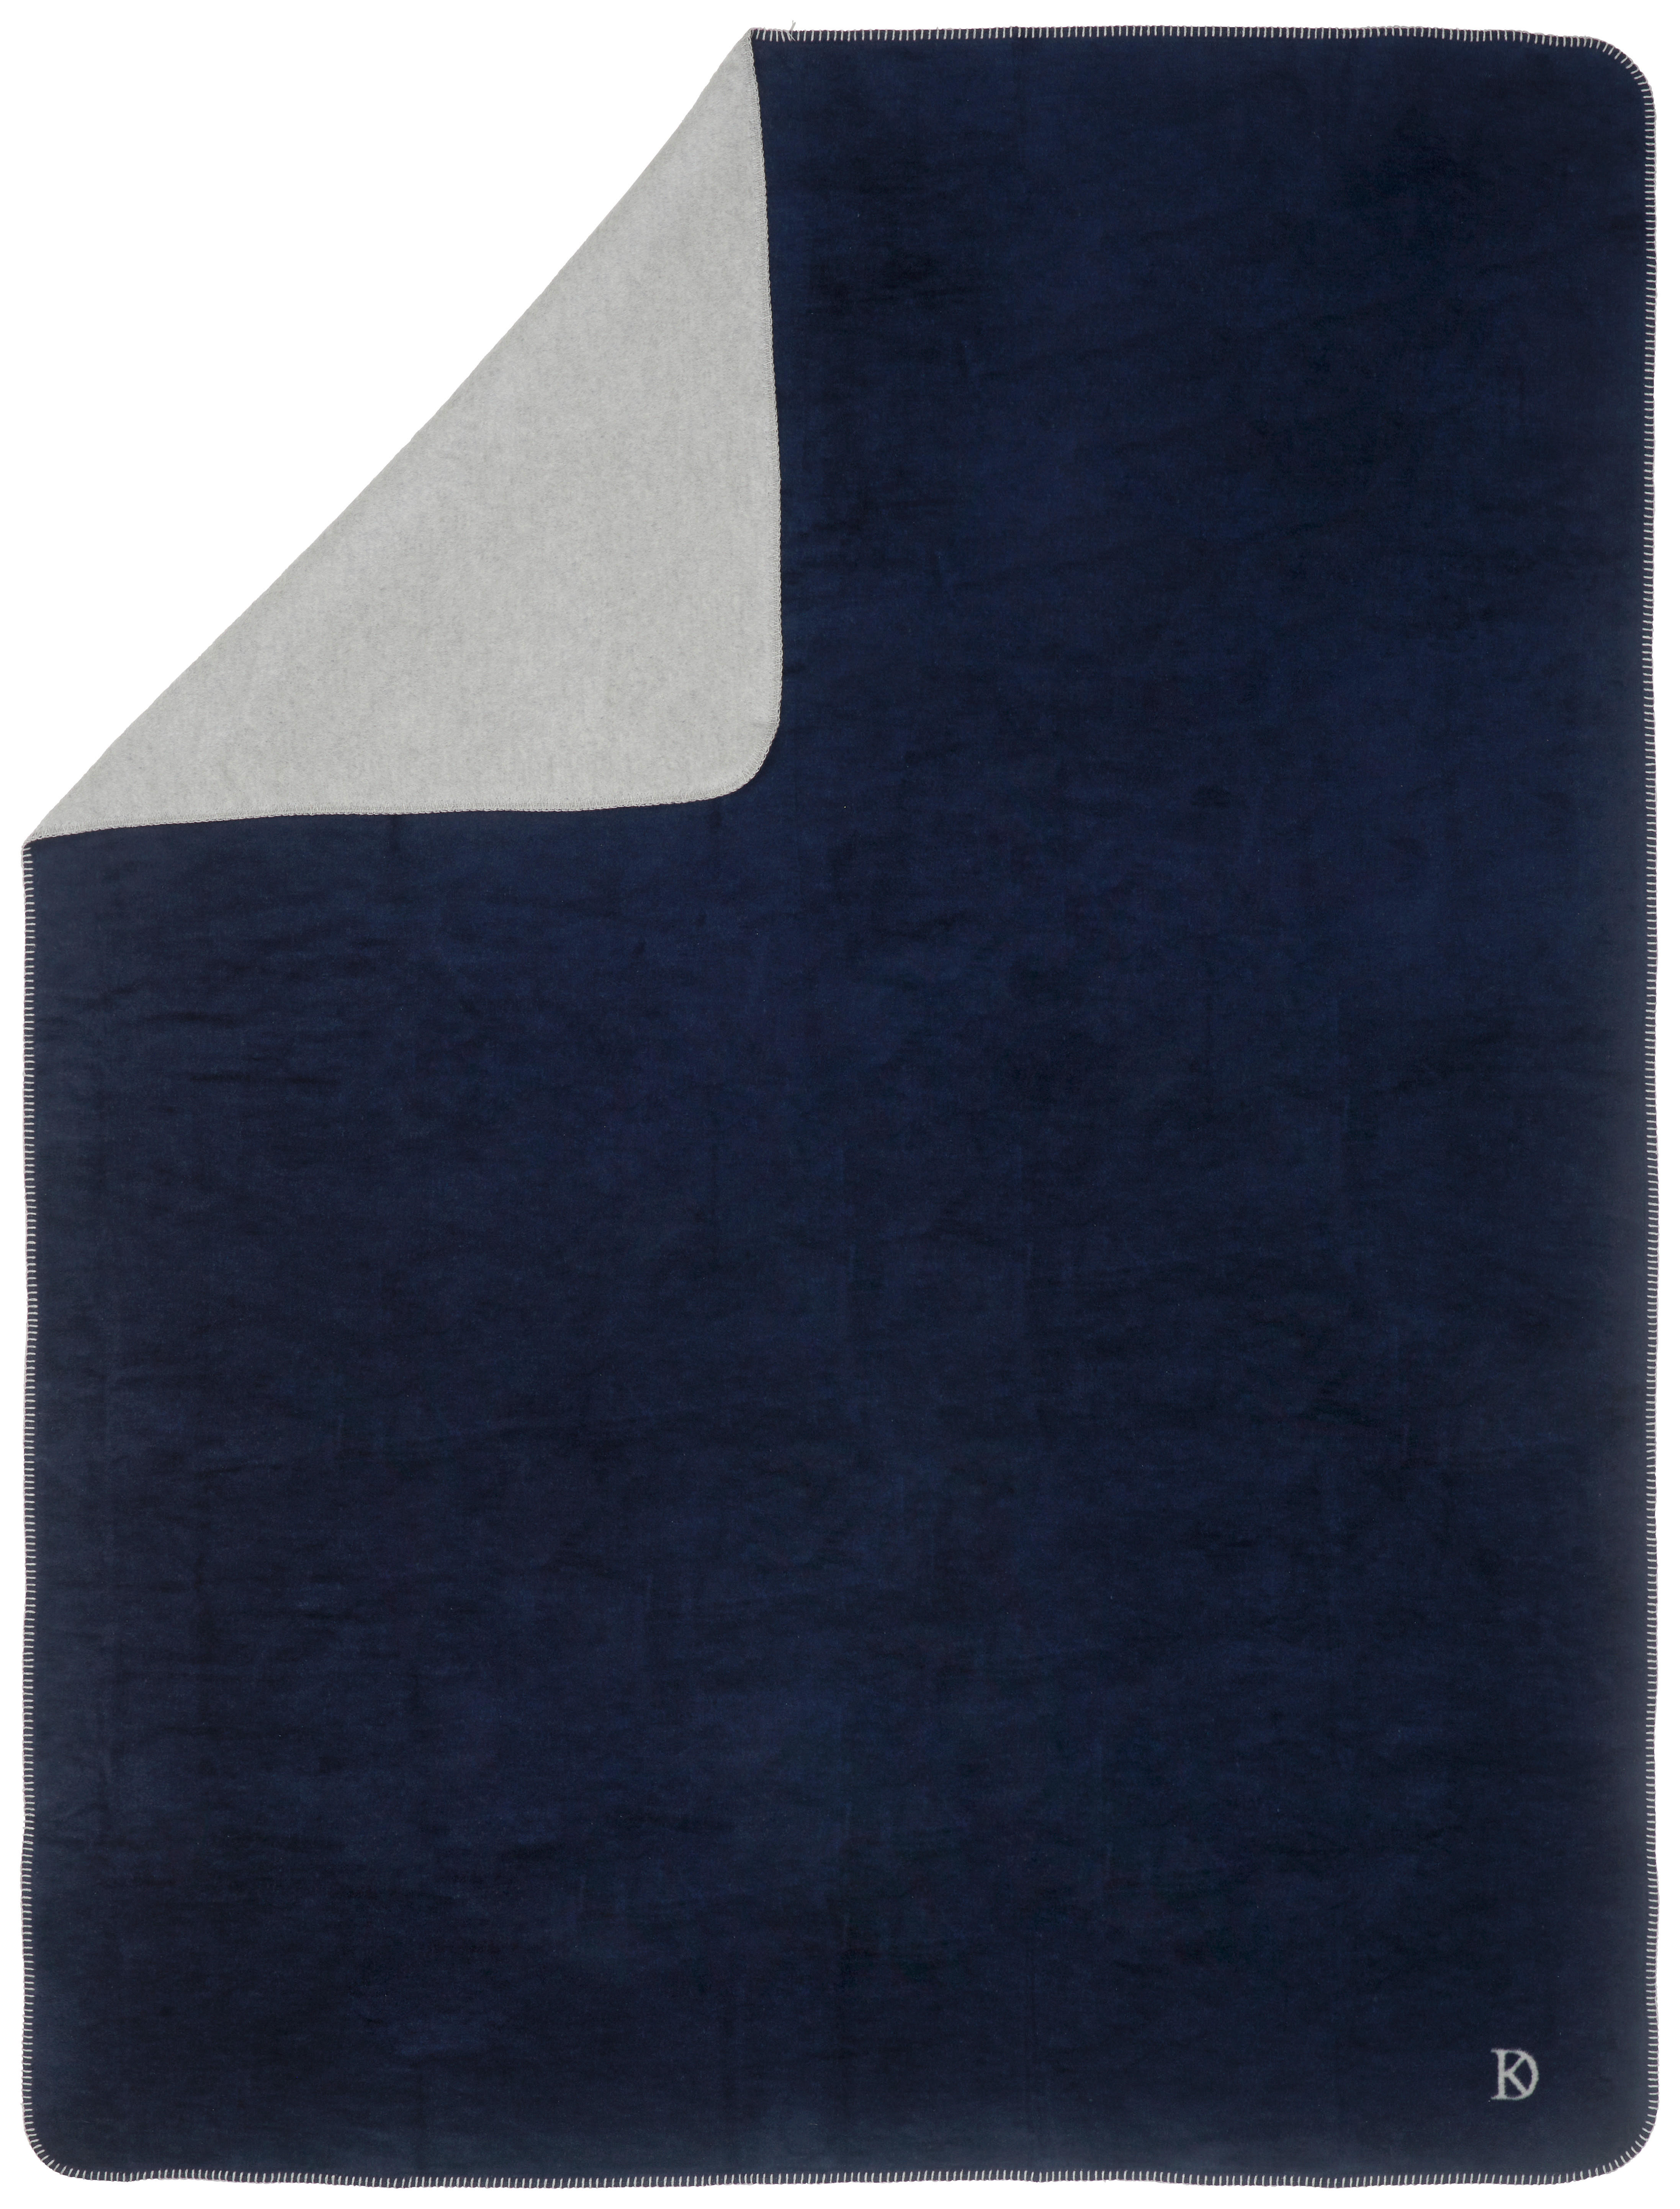 WOHNDECKE FRAME 150/200 cm  - Silberfarben/Dunkelblau, Design, Textil (150/200cm) - Dieter Knoll